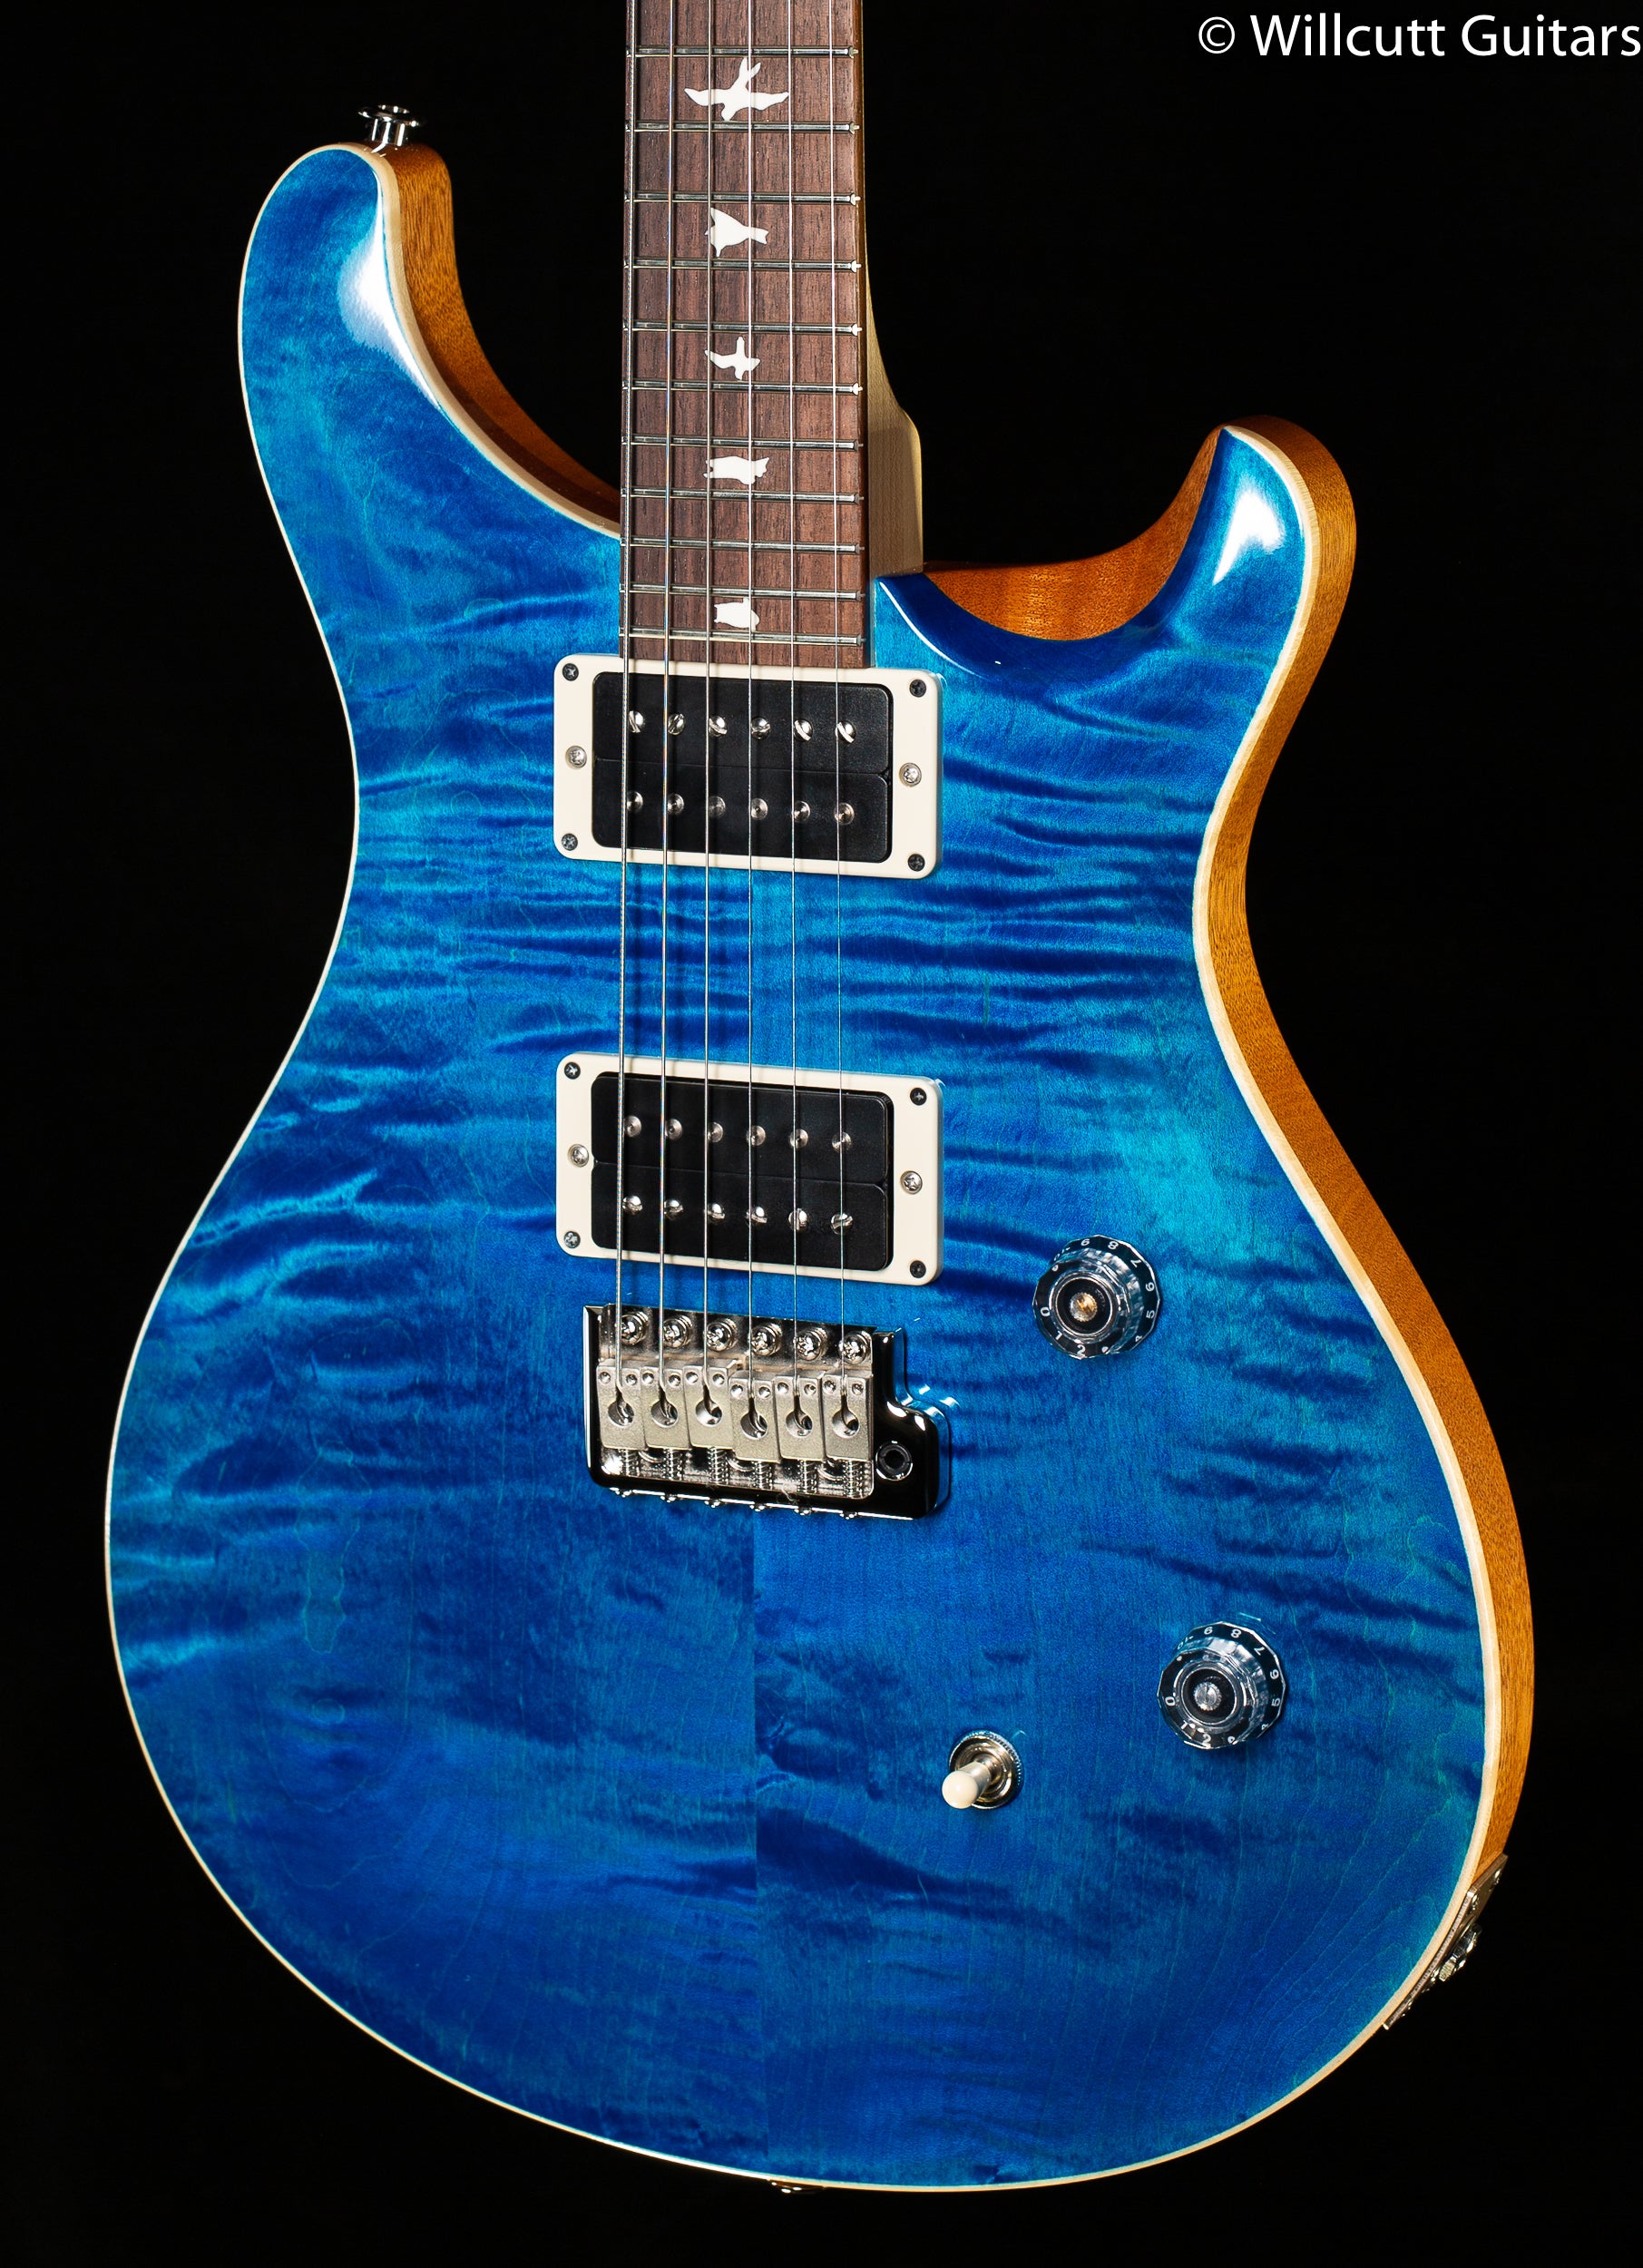 2021 PRS CE 24 Blue Matteo - Willcutt Guitars